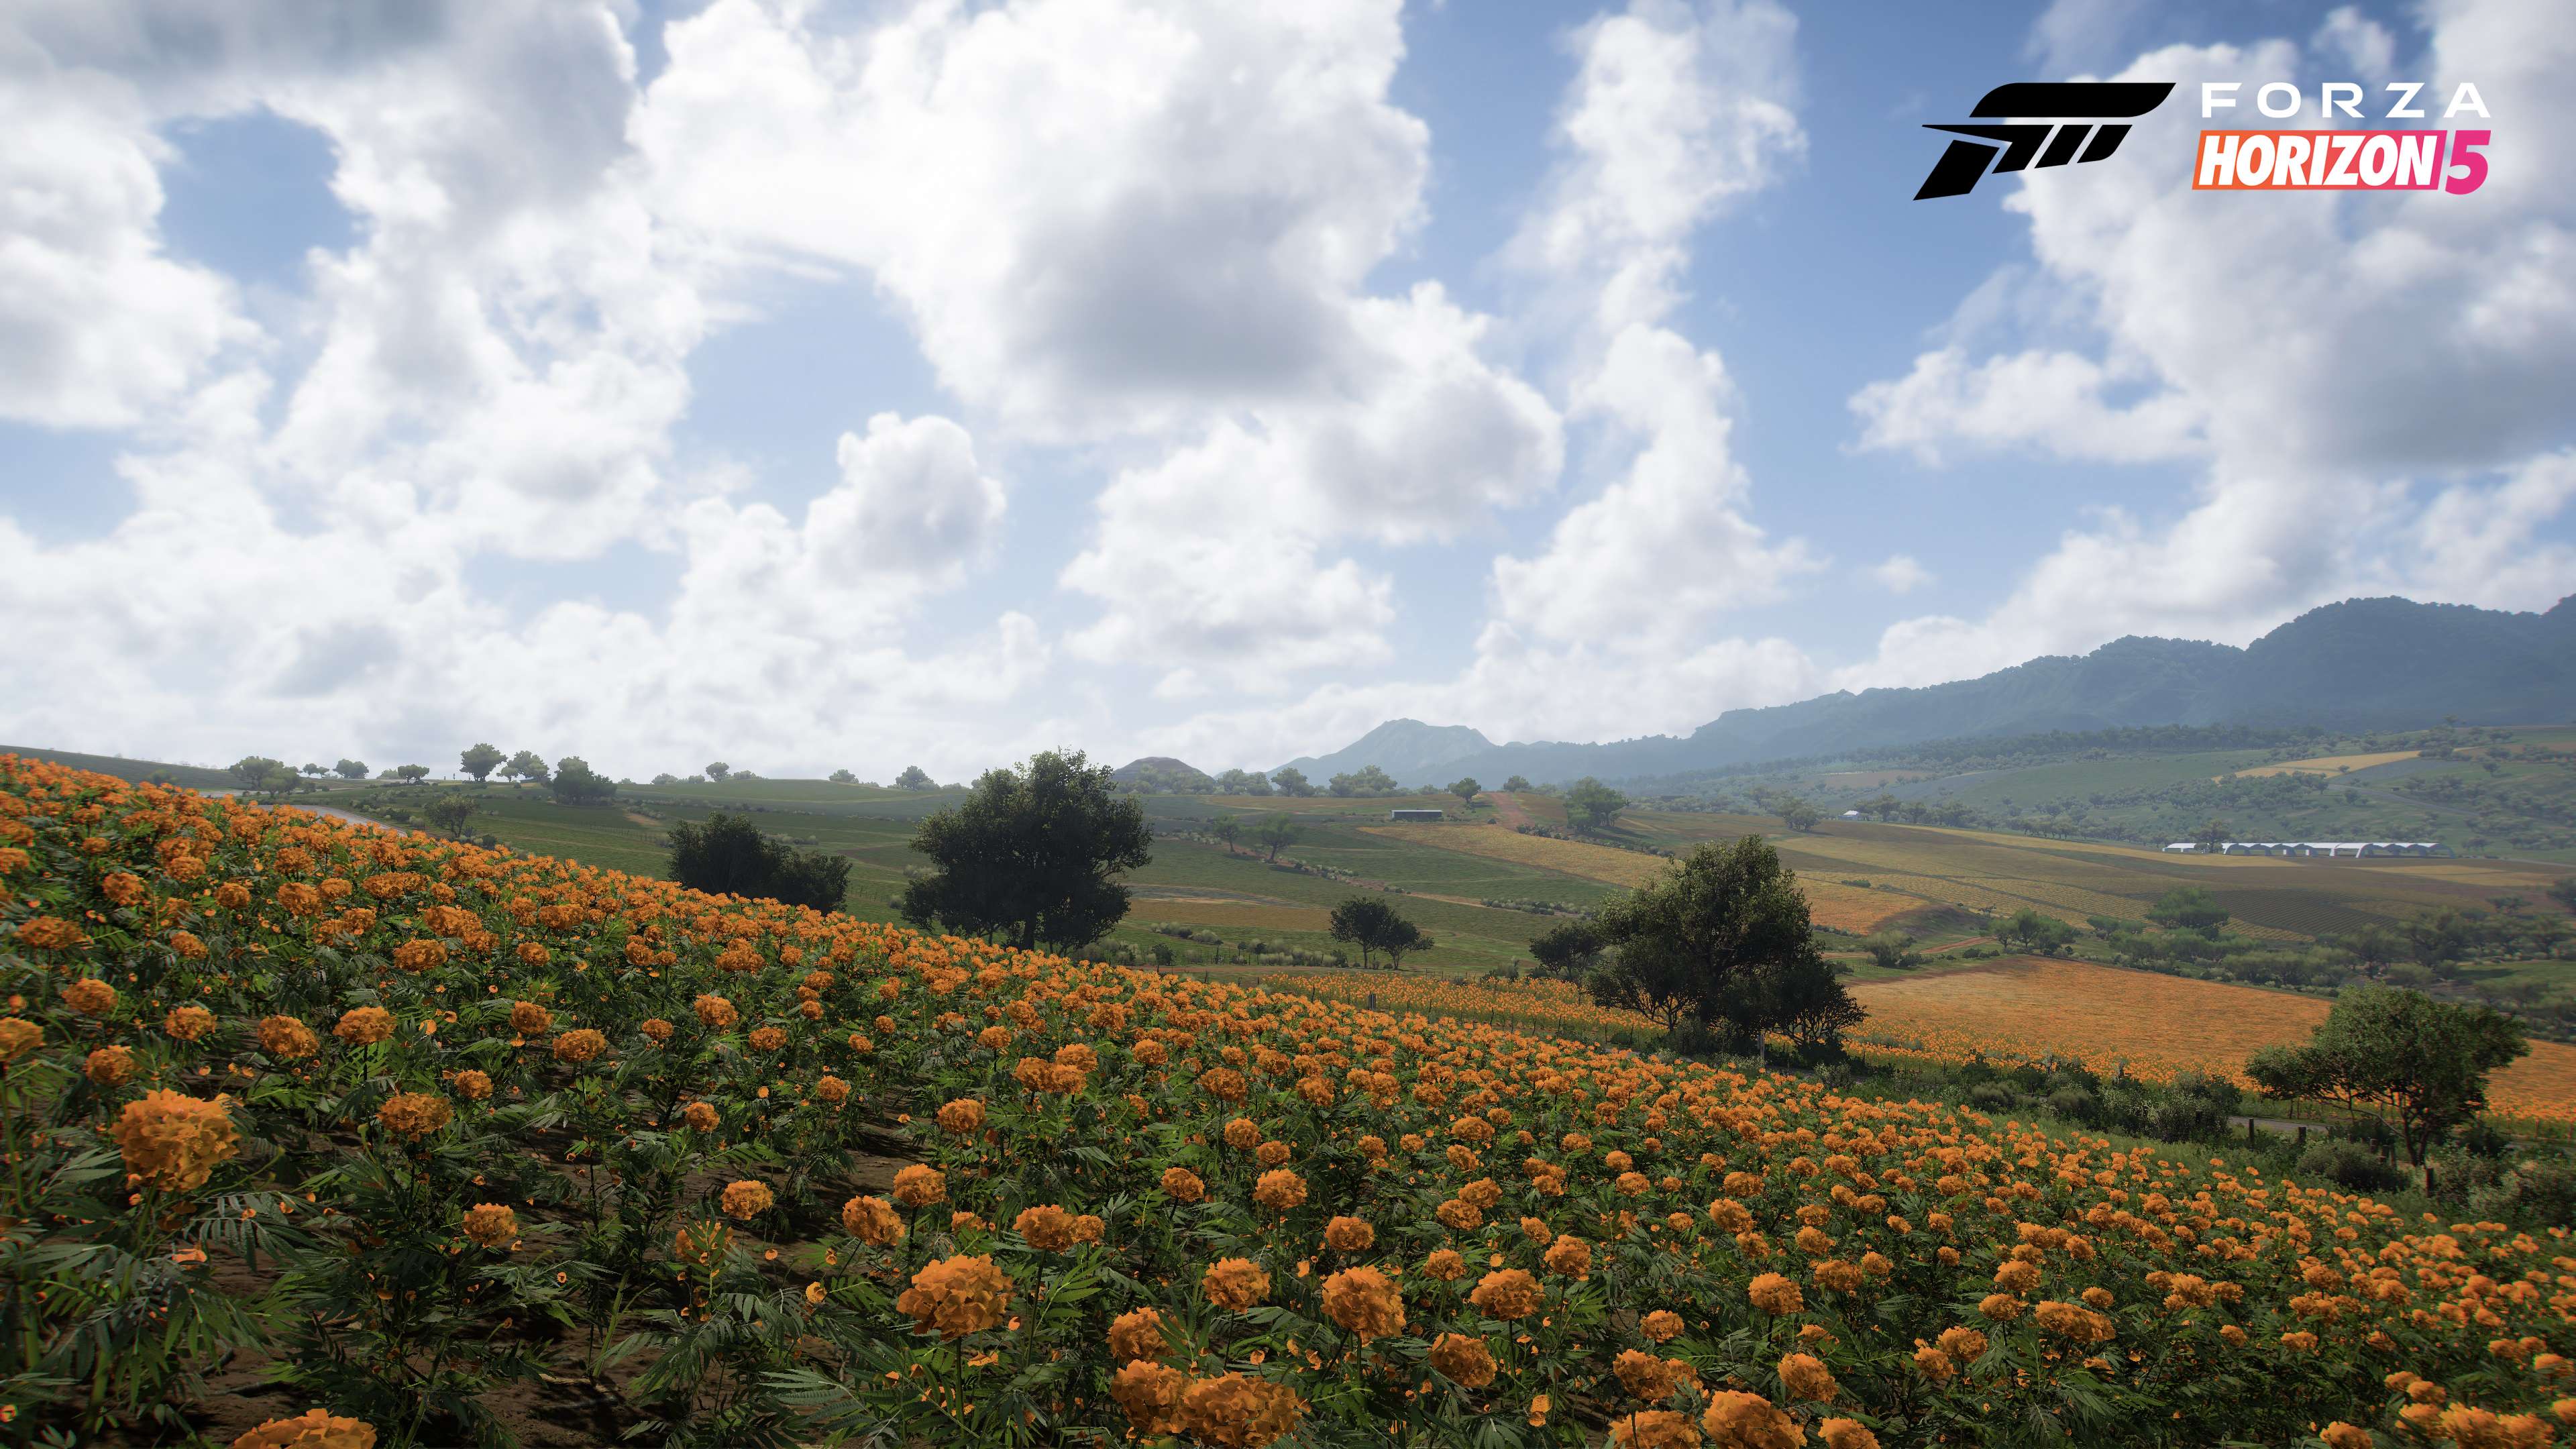 Forza-Horizon-5-screenshots-4K-9.jpg